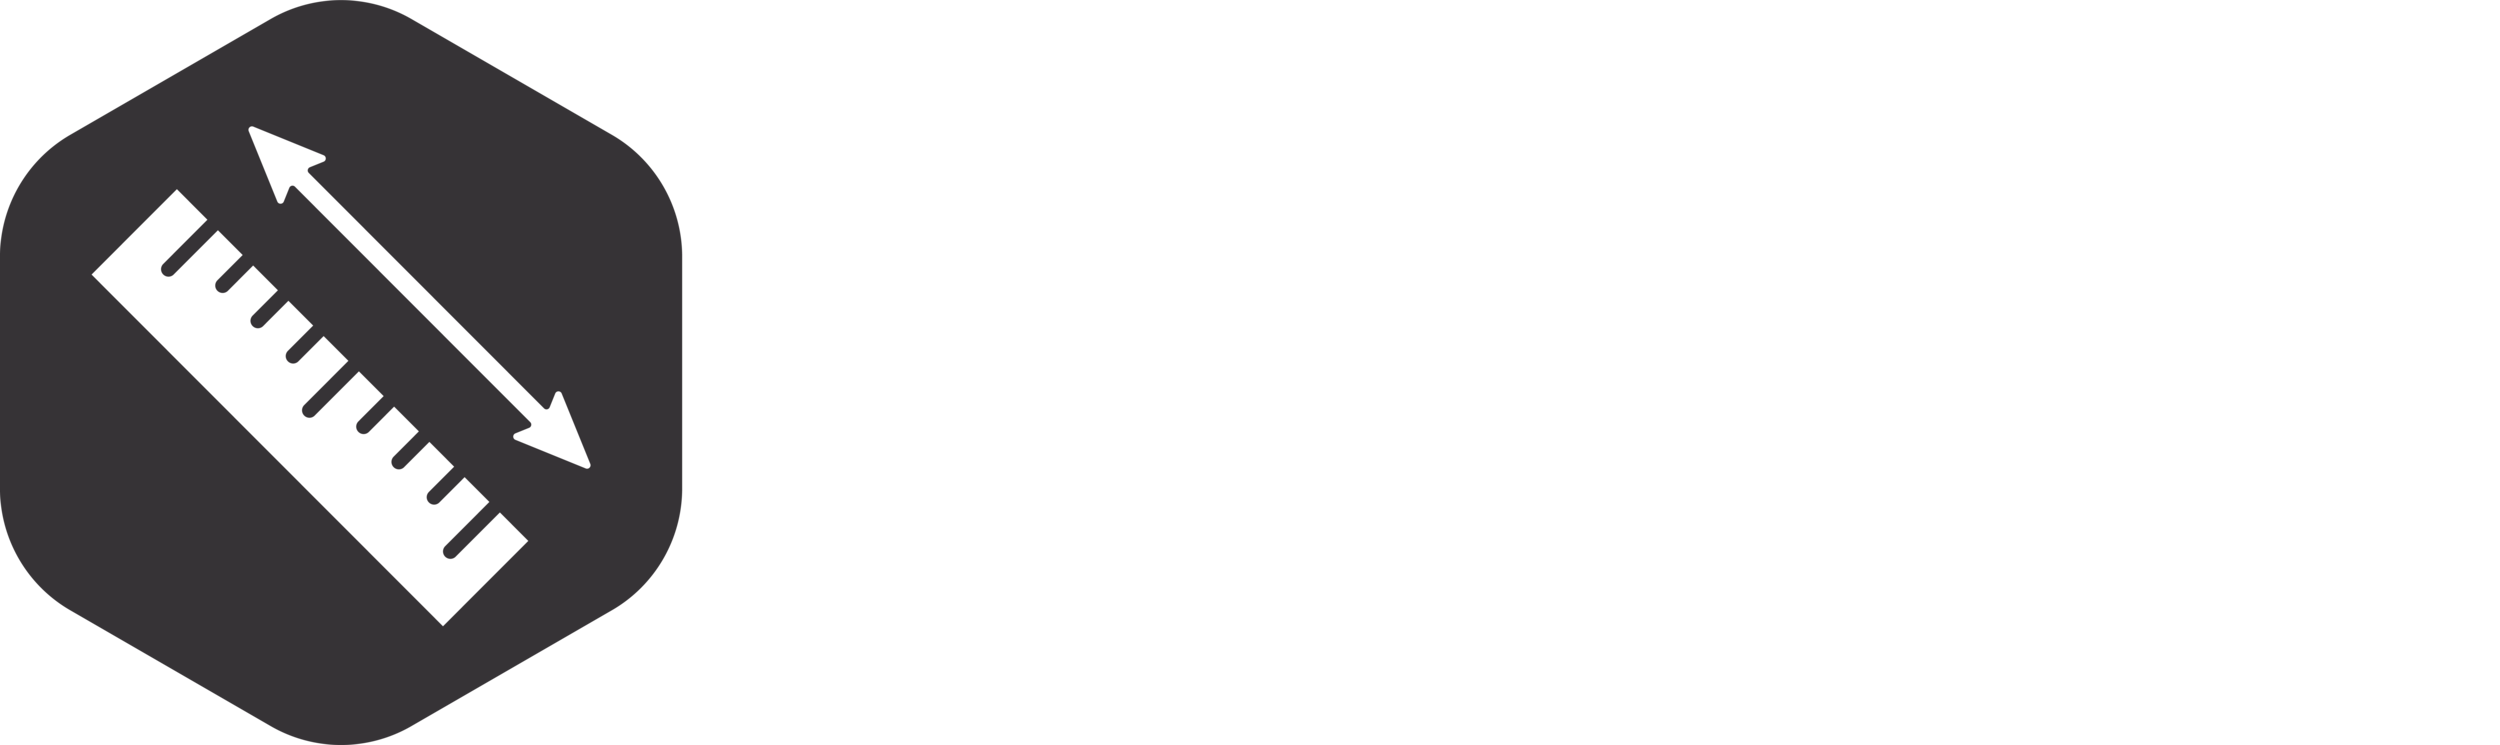 Experiential Marketing Measurement Coalition